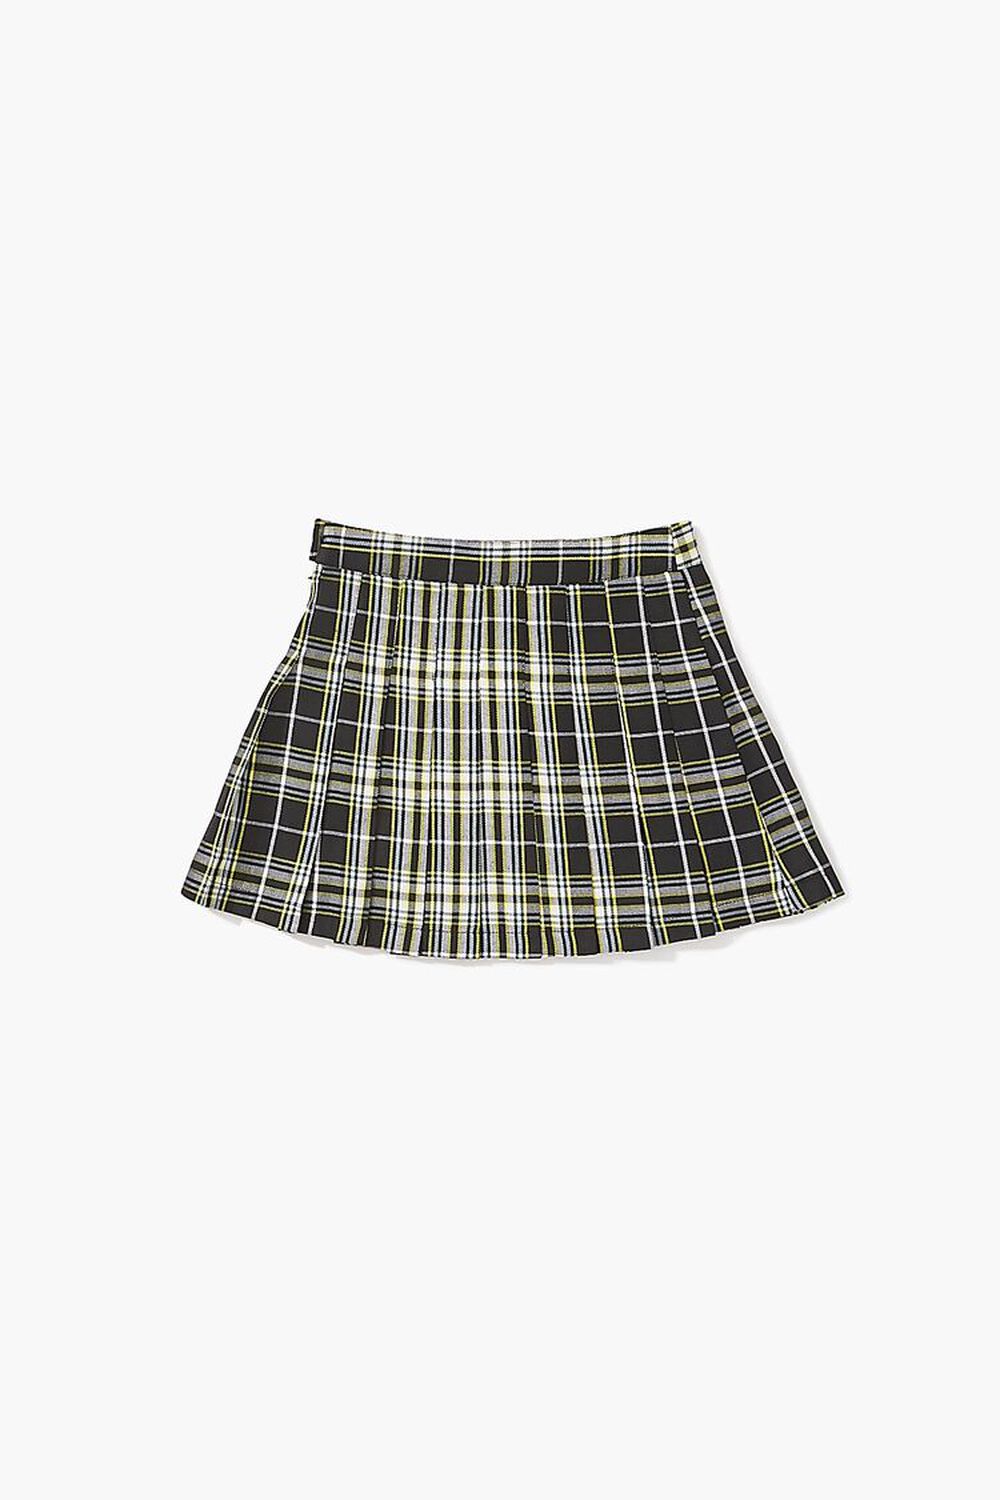 Girls Plaid A-Line Skirt (Kids), image 2